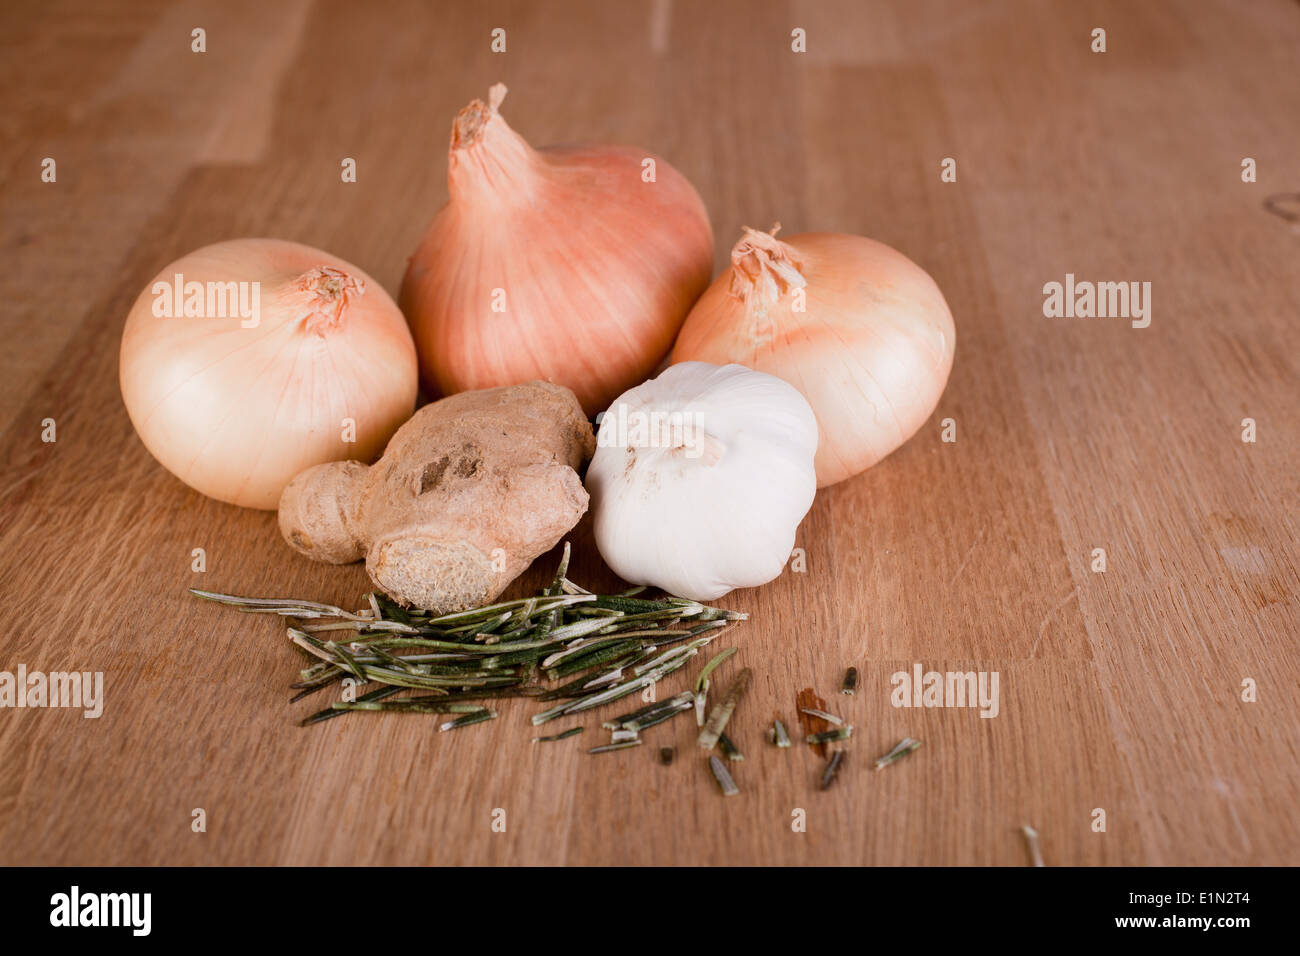 Cooking ingredients Stock Photo